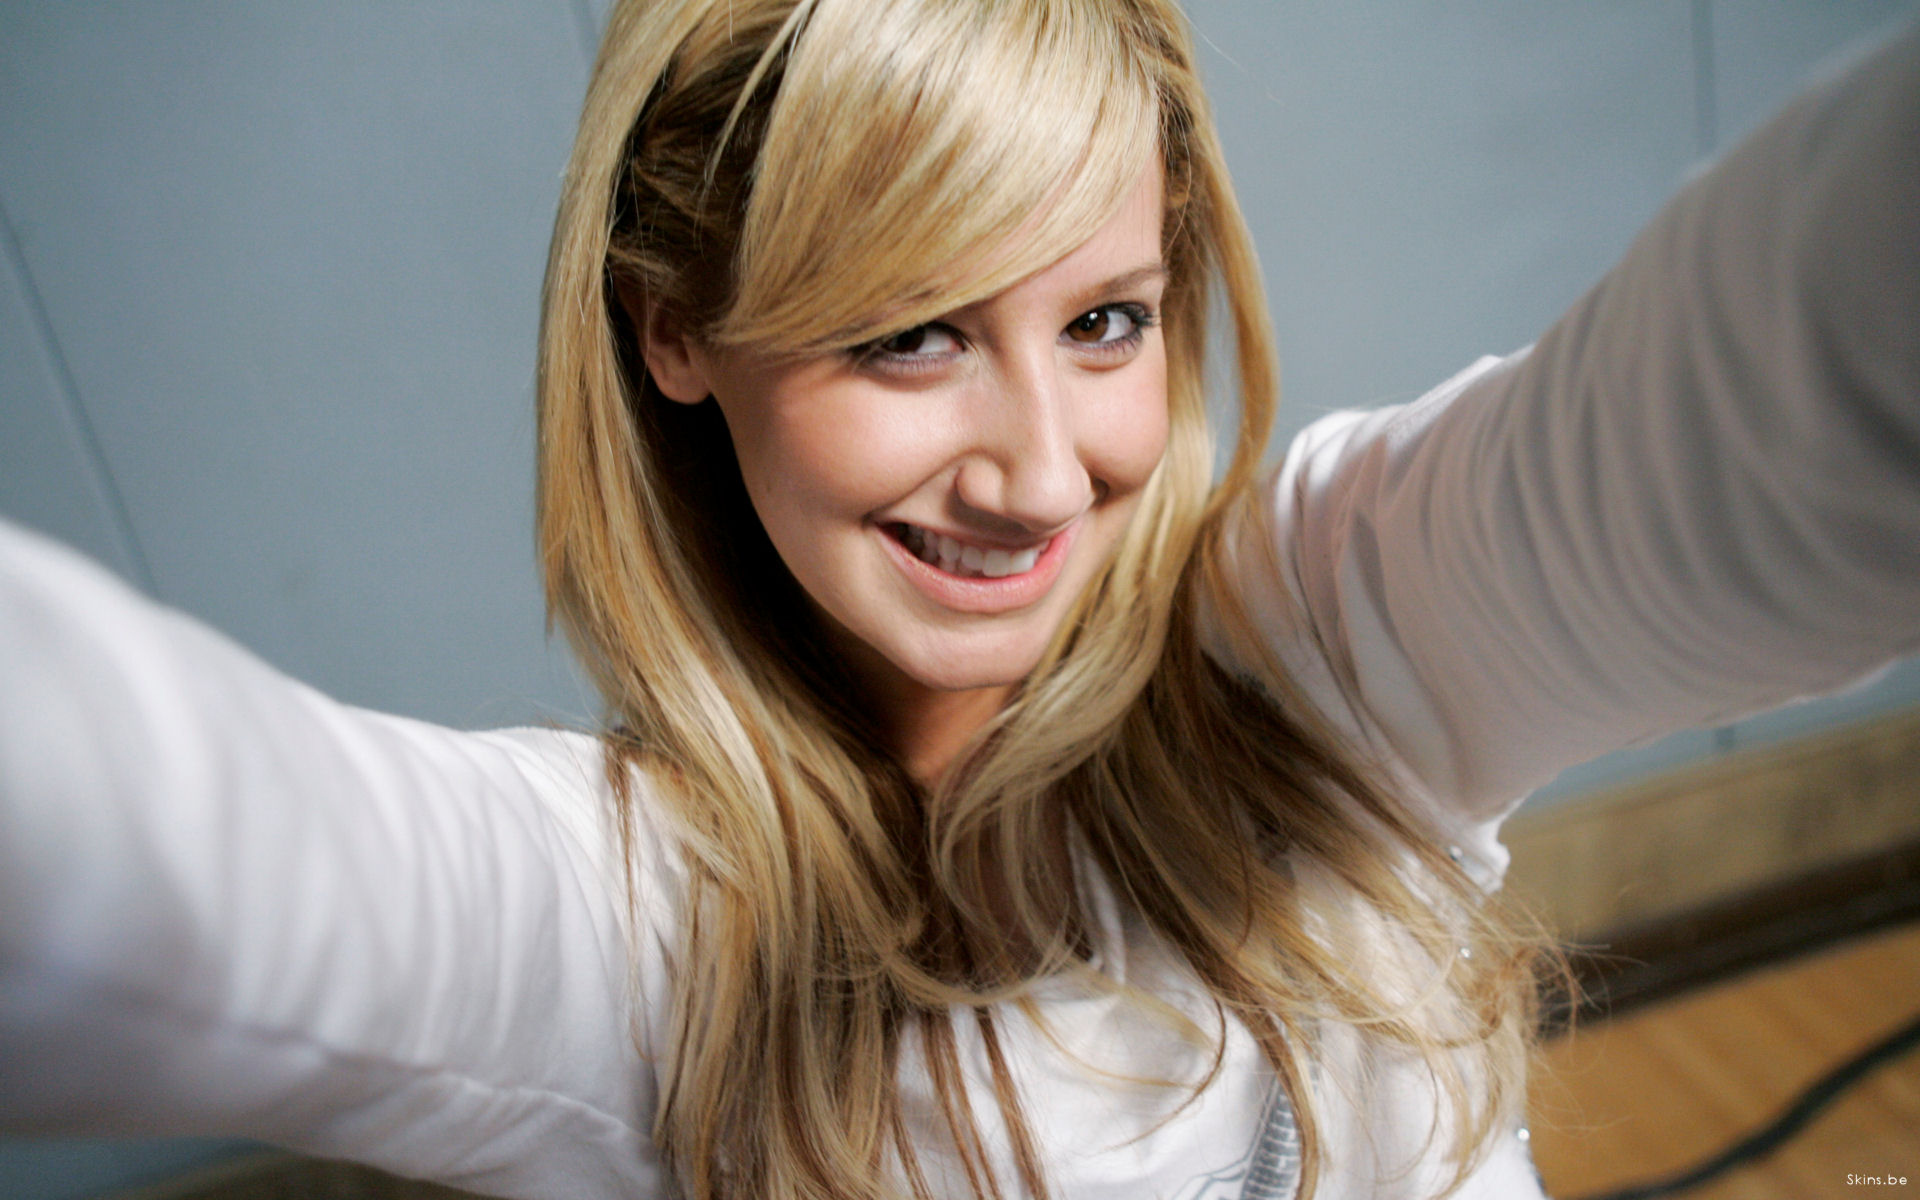 Download mobile wallpaper Celebrity, Ashley Tisdale for free.